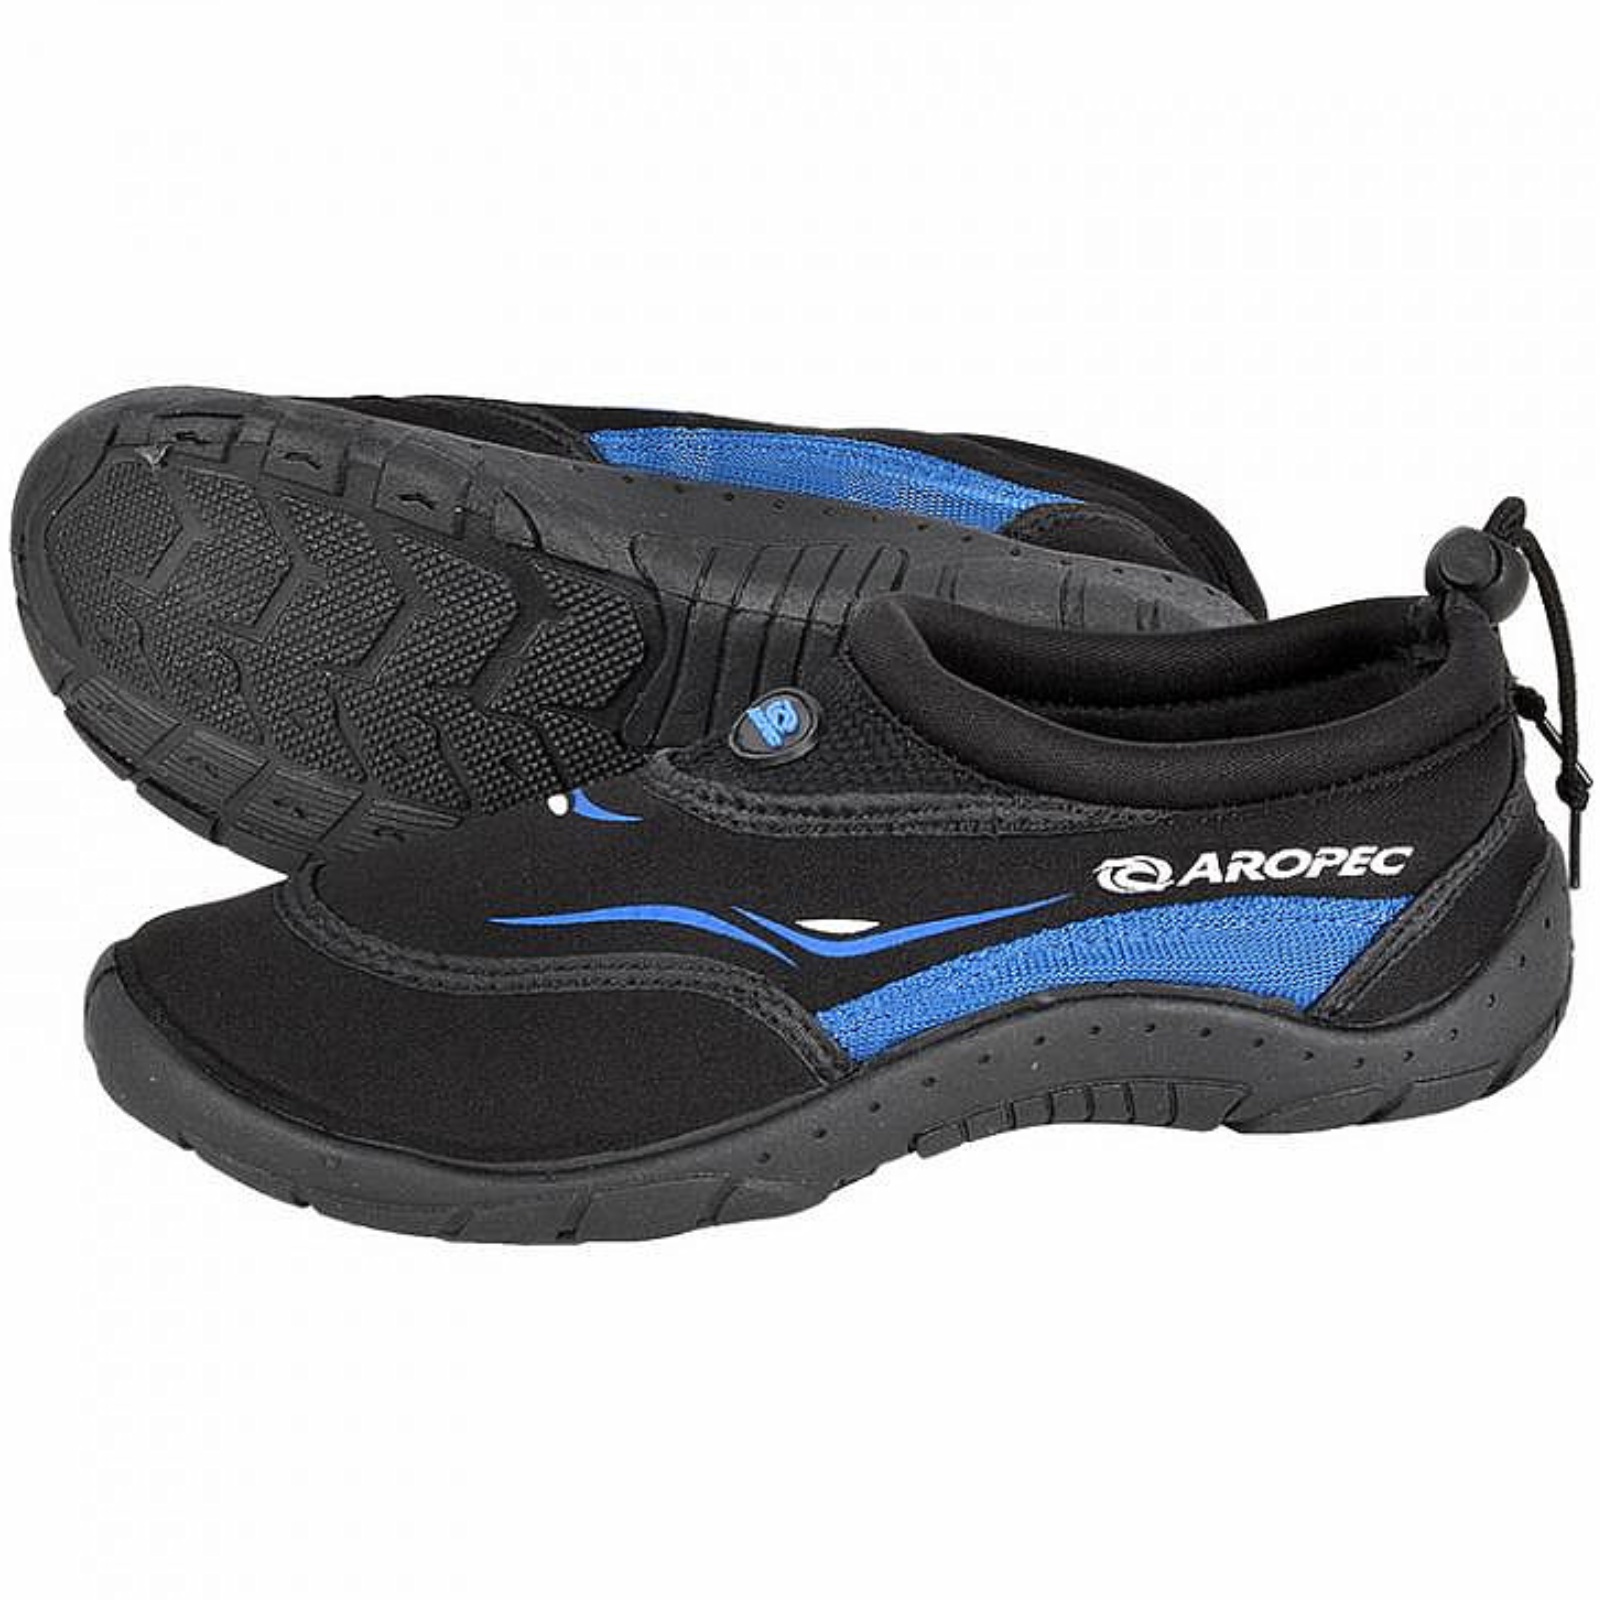 Neoprenové boty AROPEC Aqua Shoes - vel. 37-38